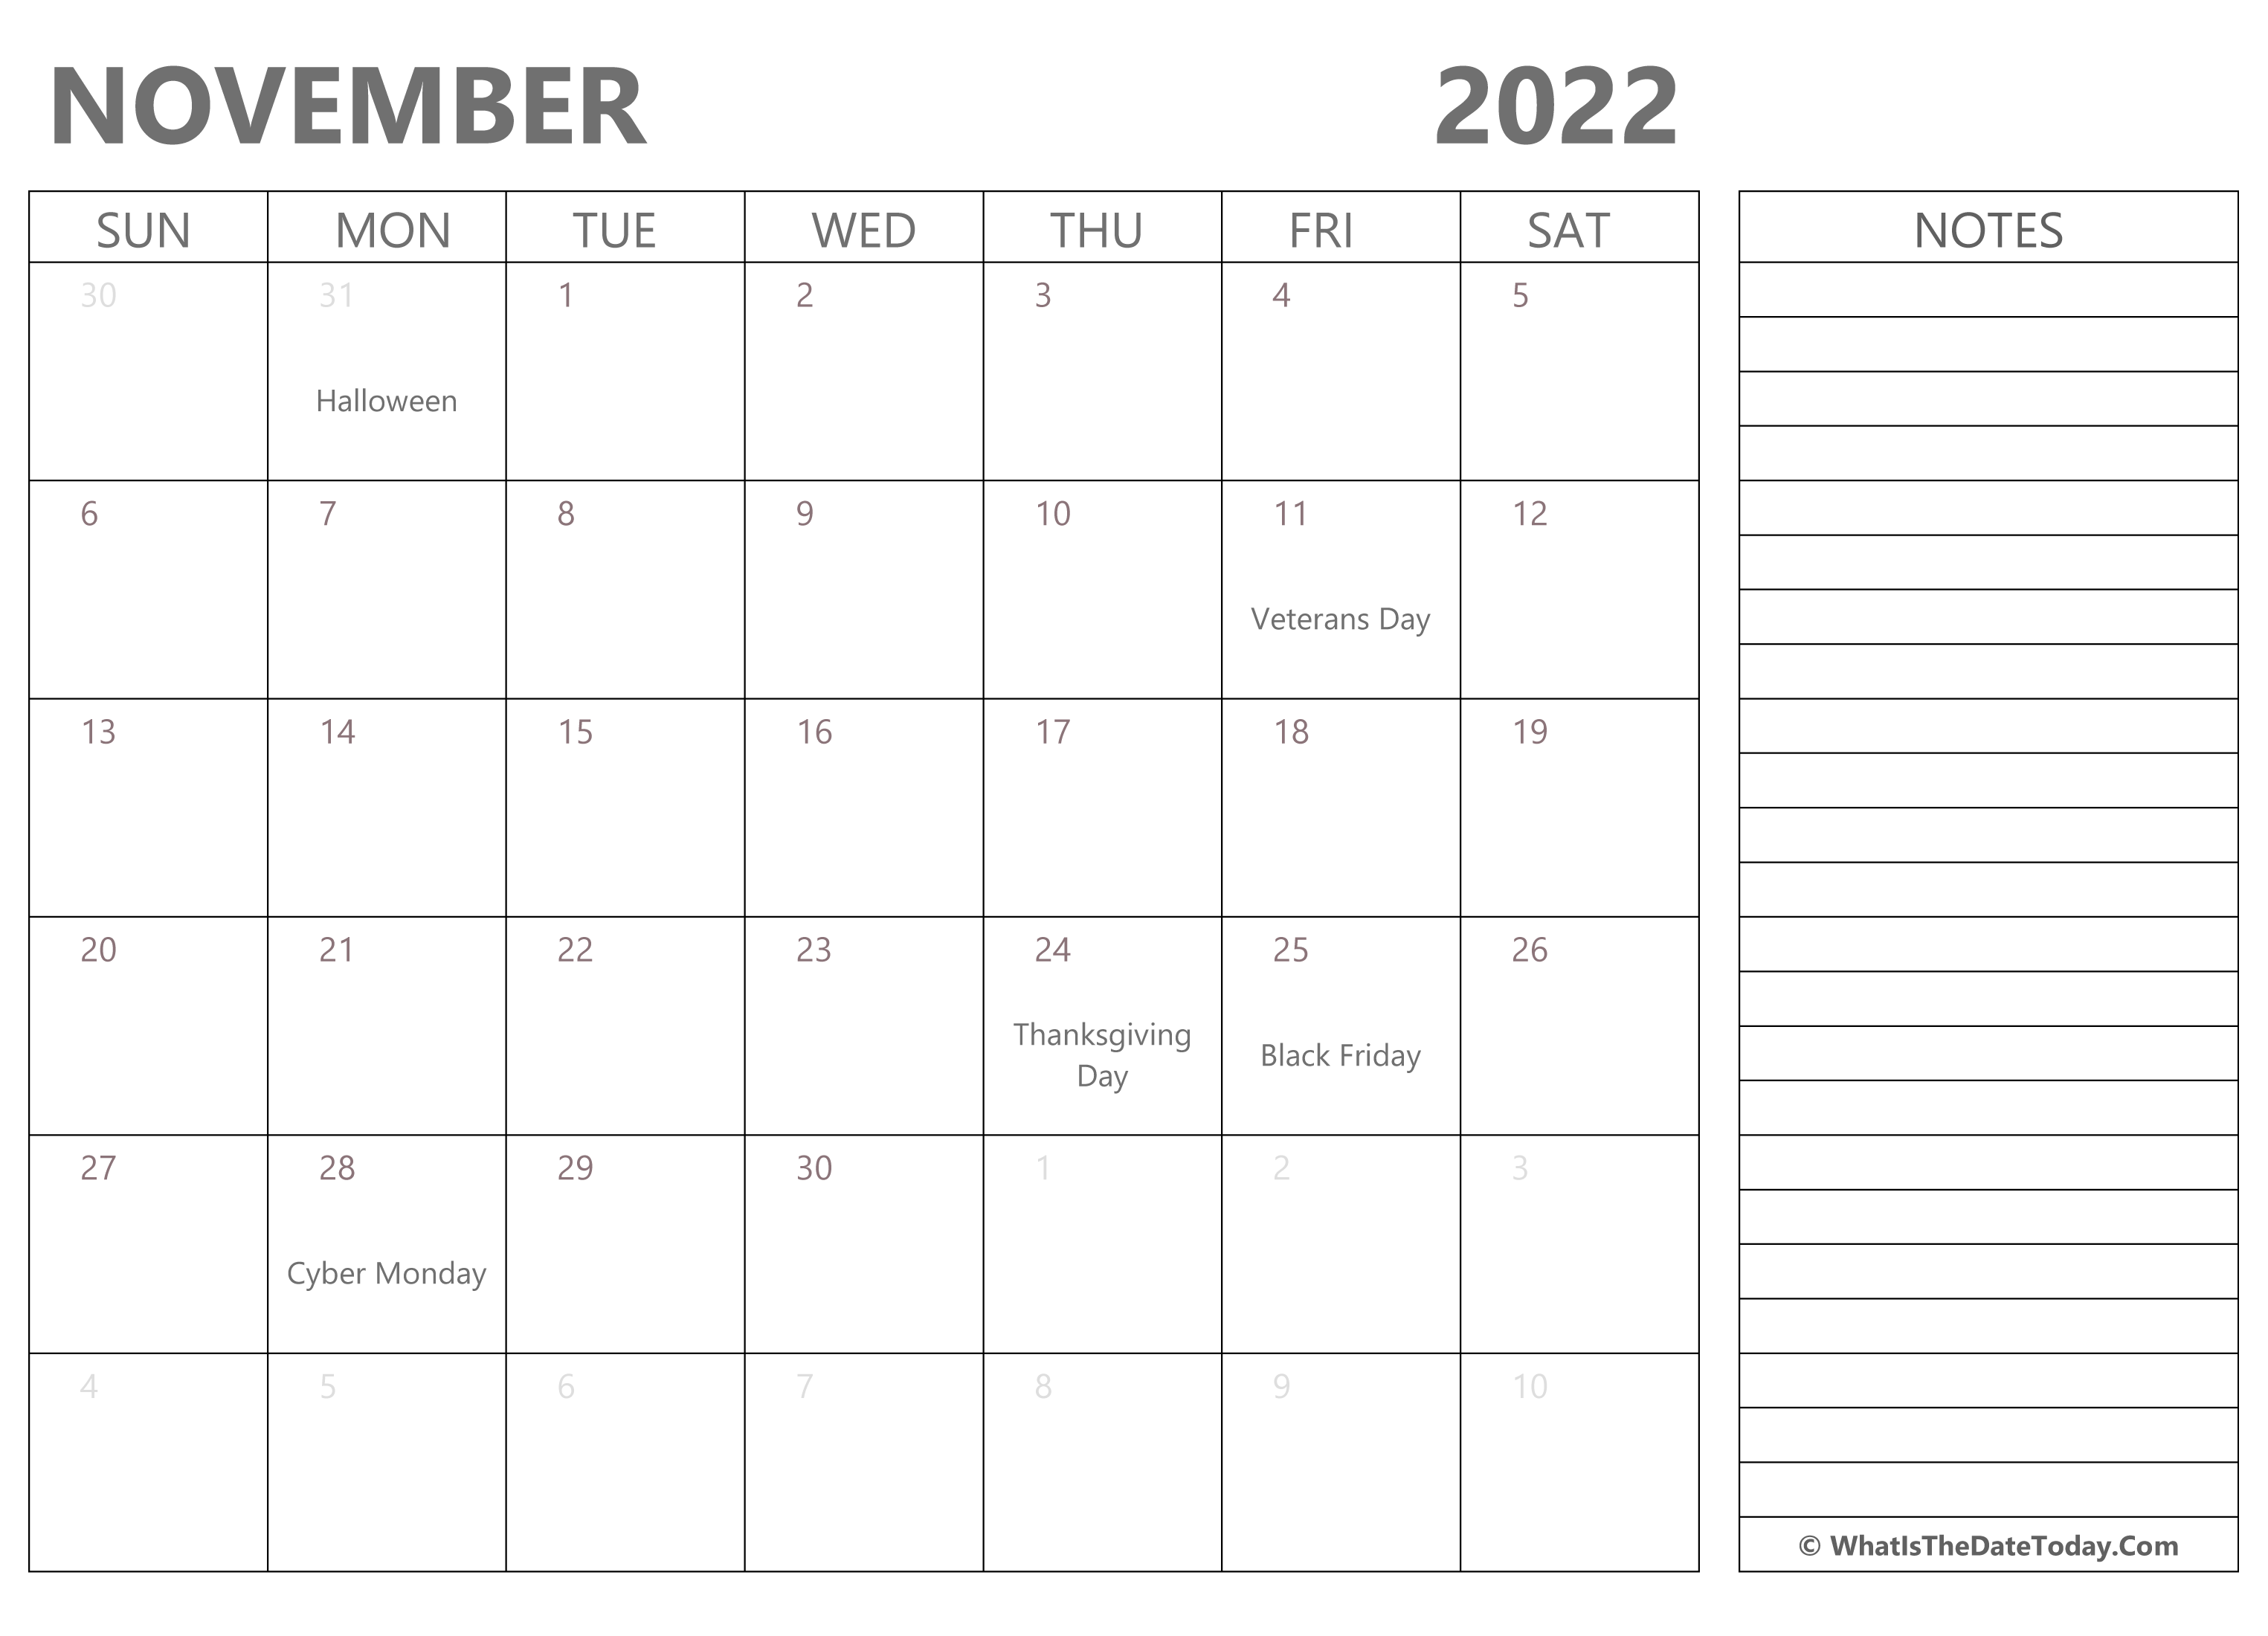 Editable November 2022 Calendar Editable November 2022 Calendar With Holidays And Notes |  Whatisthedatetoday.com